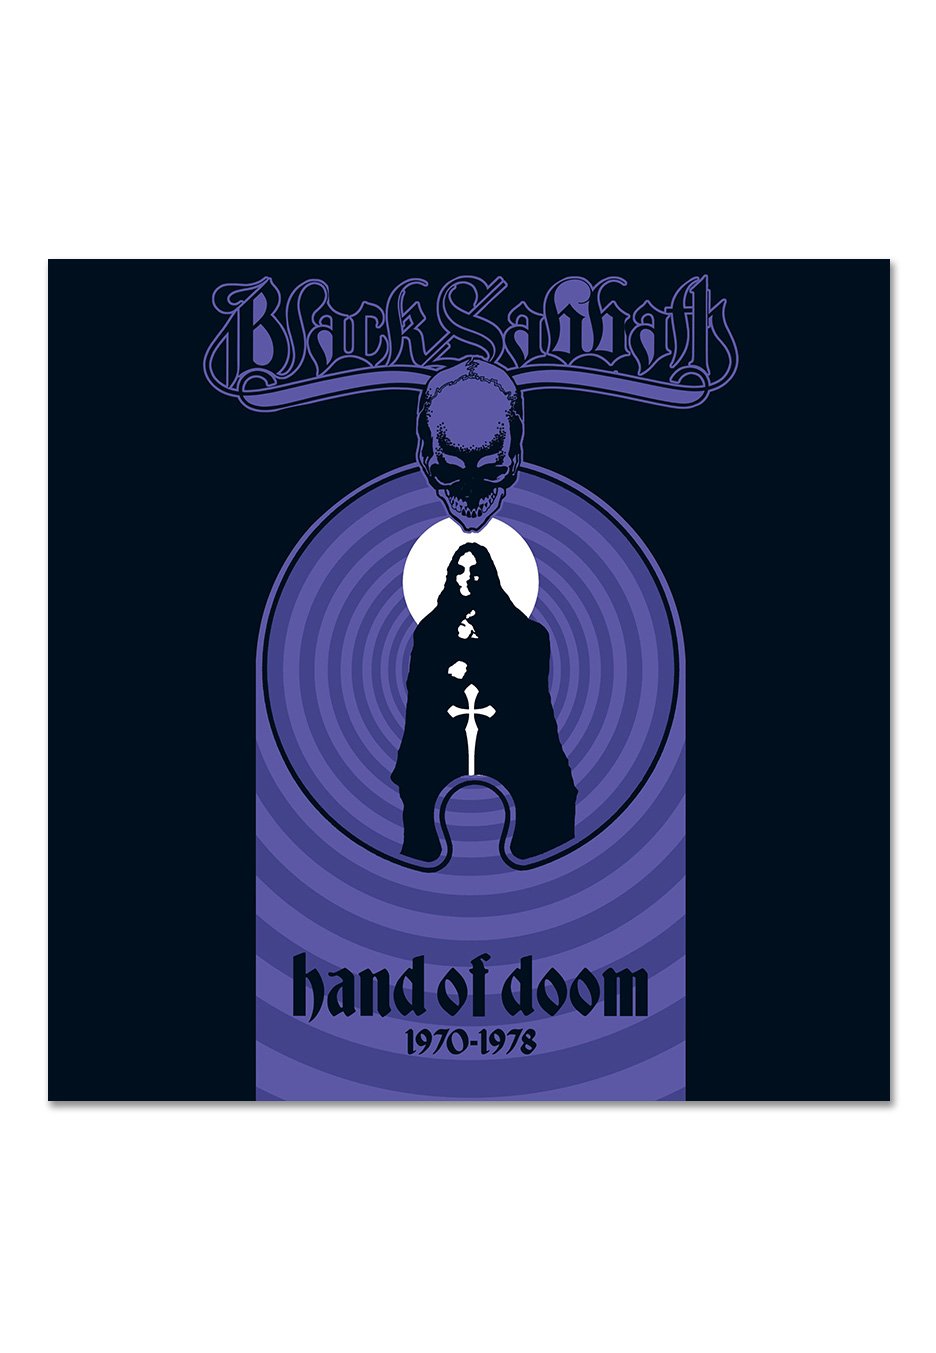 Black Sabbath - Hand Of Doom 1970-1978 (Super Deluxe) - 8 Picture Vinyl Boxset